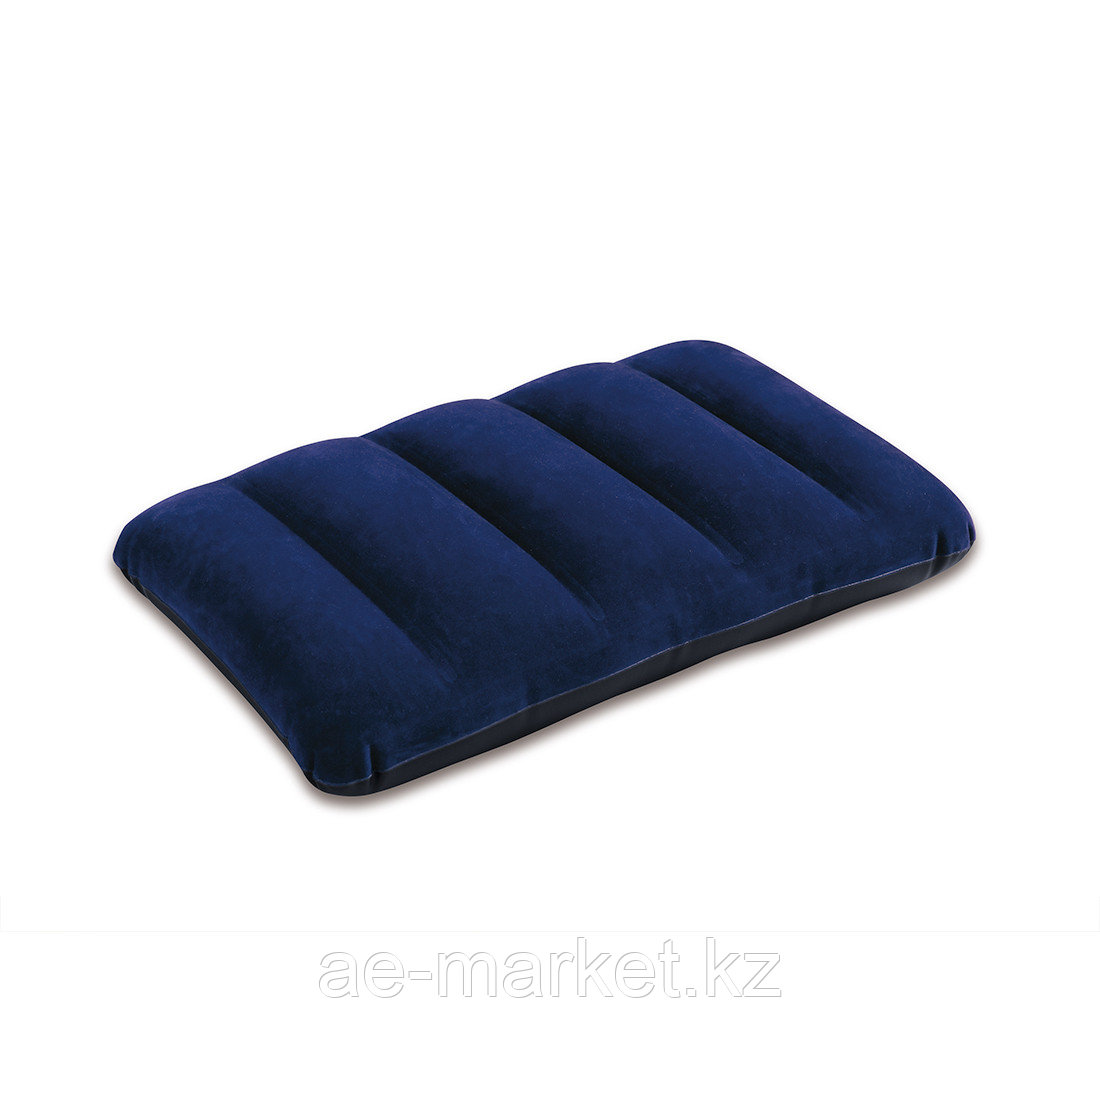 Надувная подушка Intex 68672, фото 1